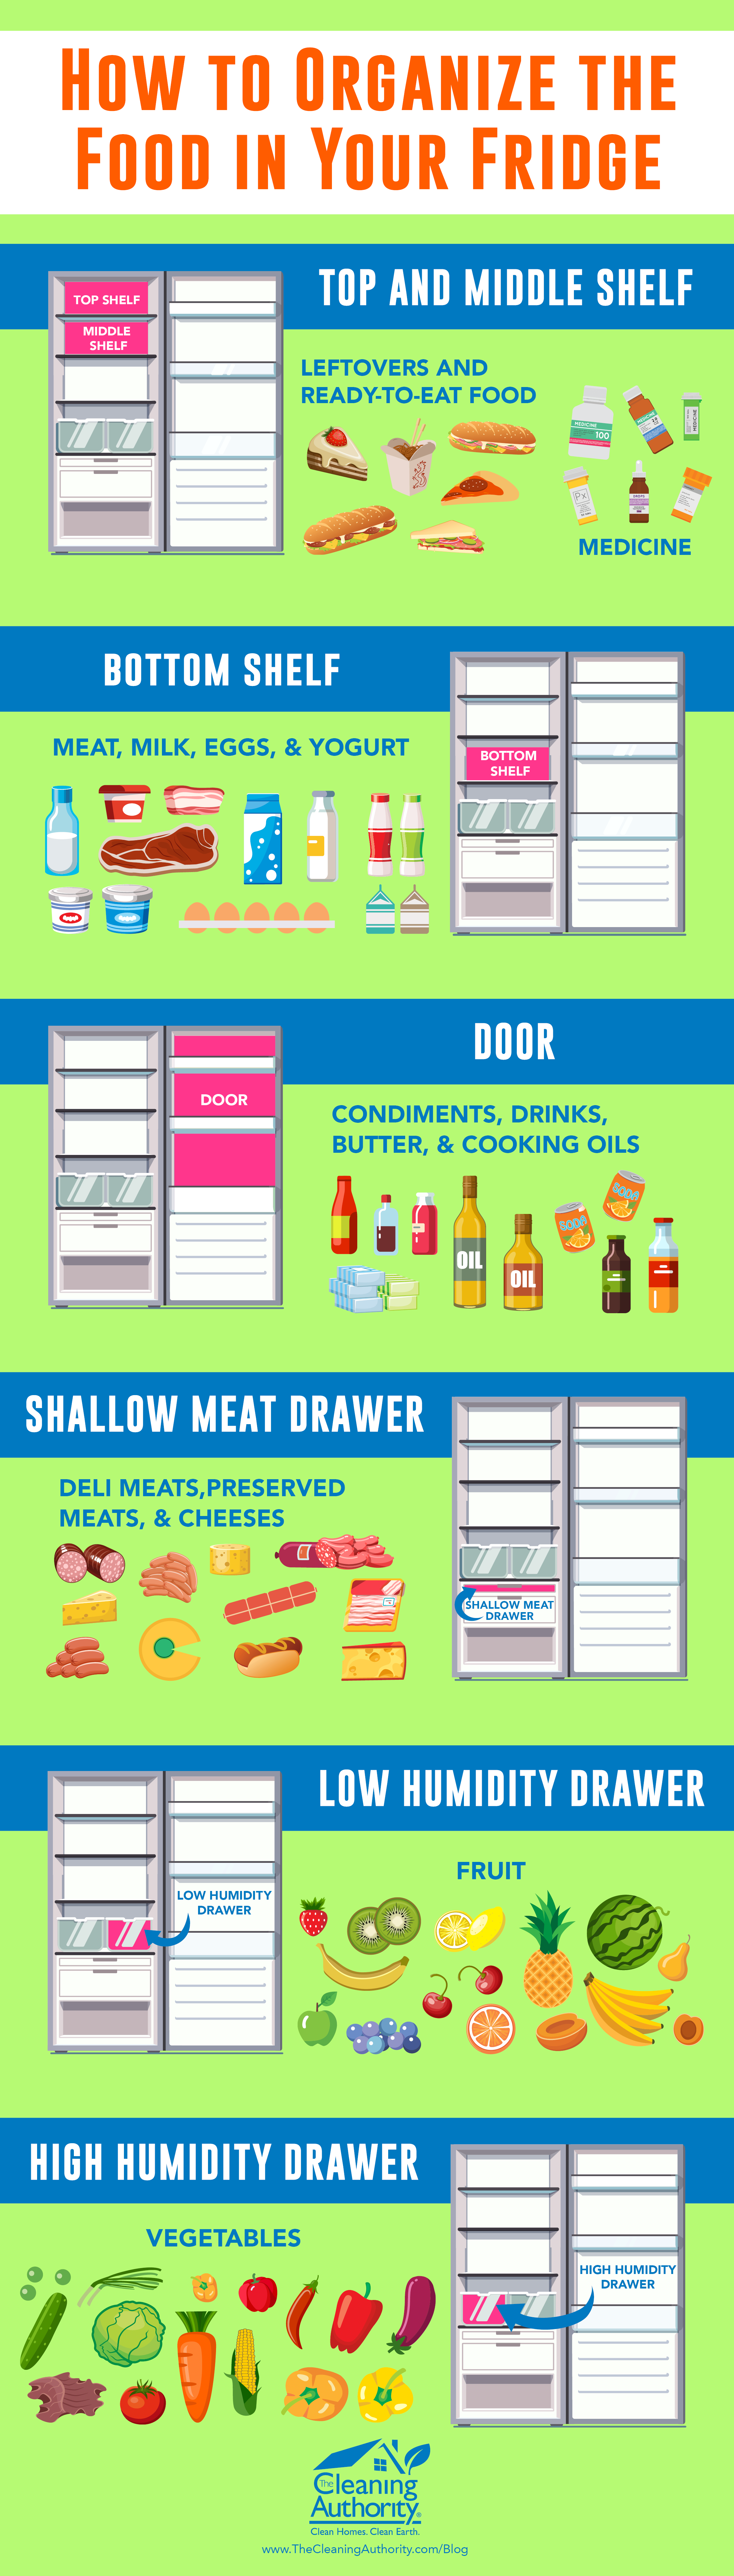 Refrigerator Organization Infographic